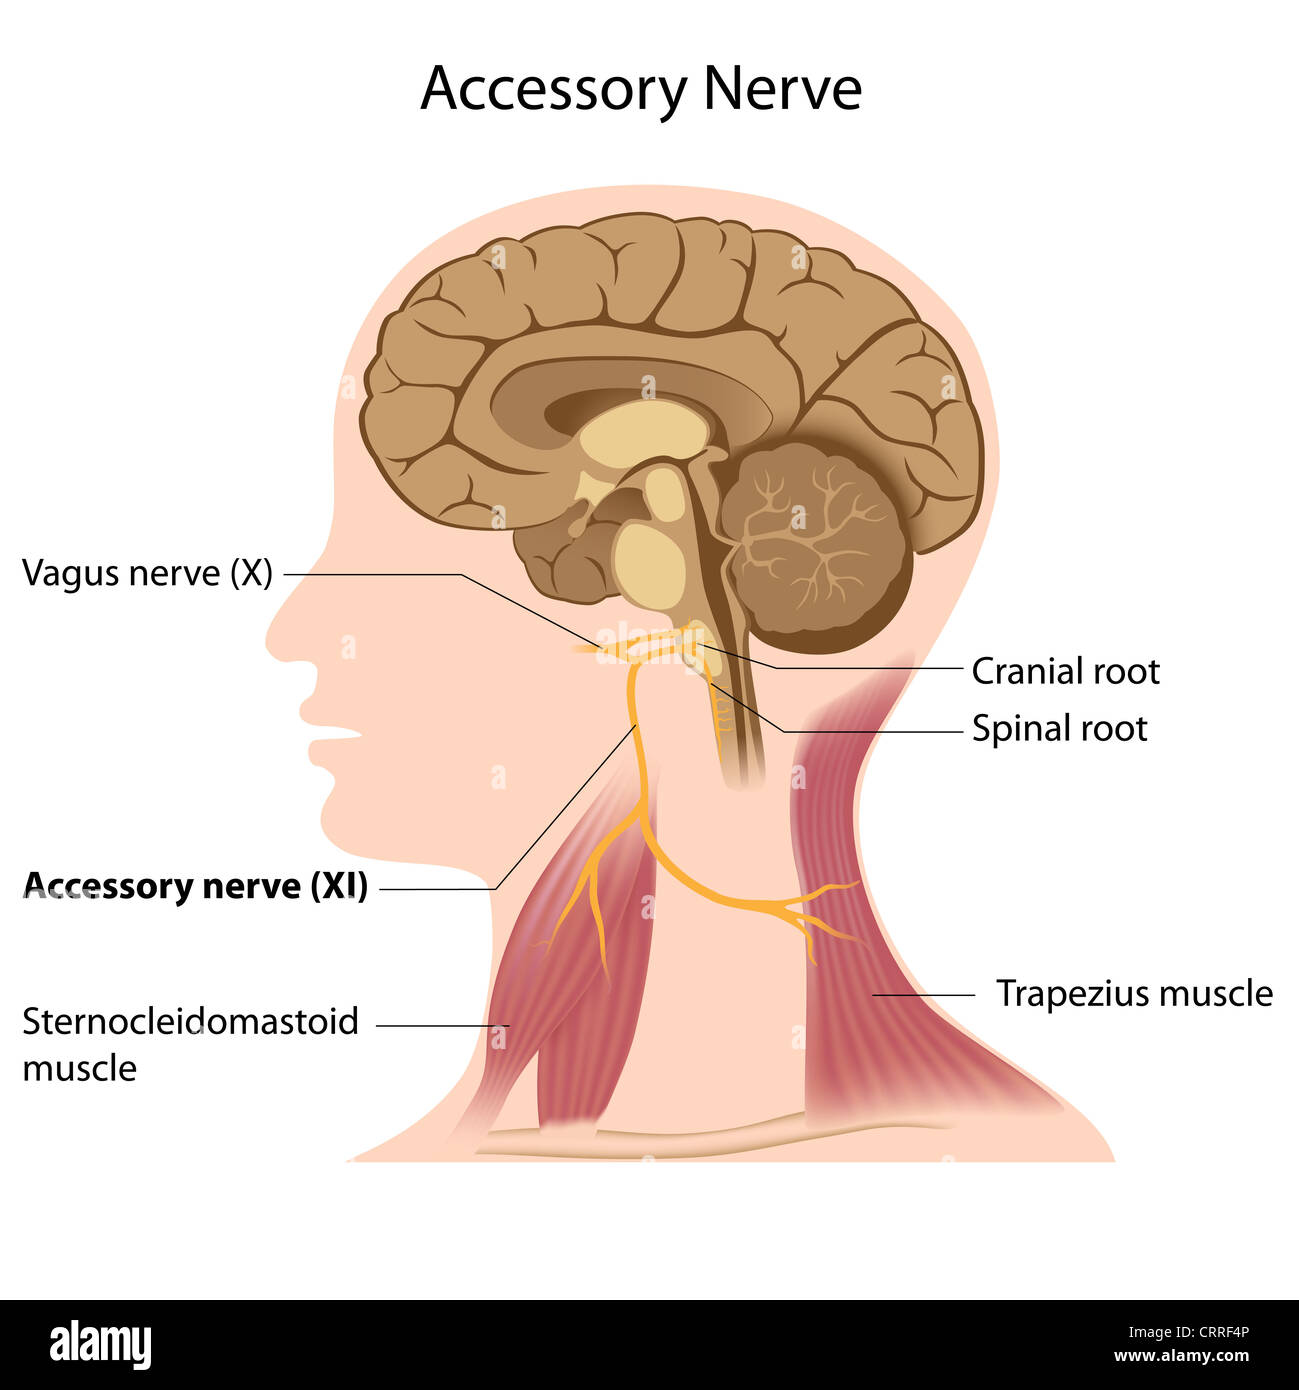 Accessory nerve anatomy Stock Photo